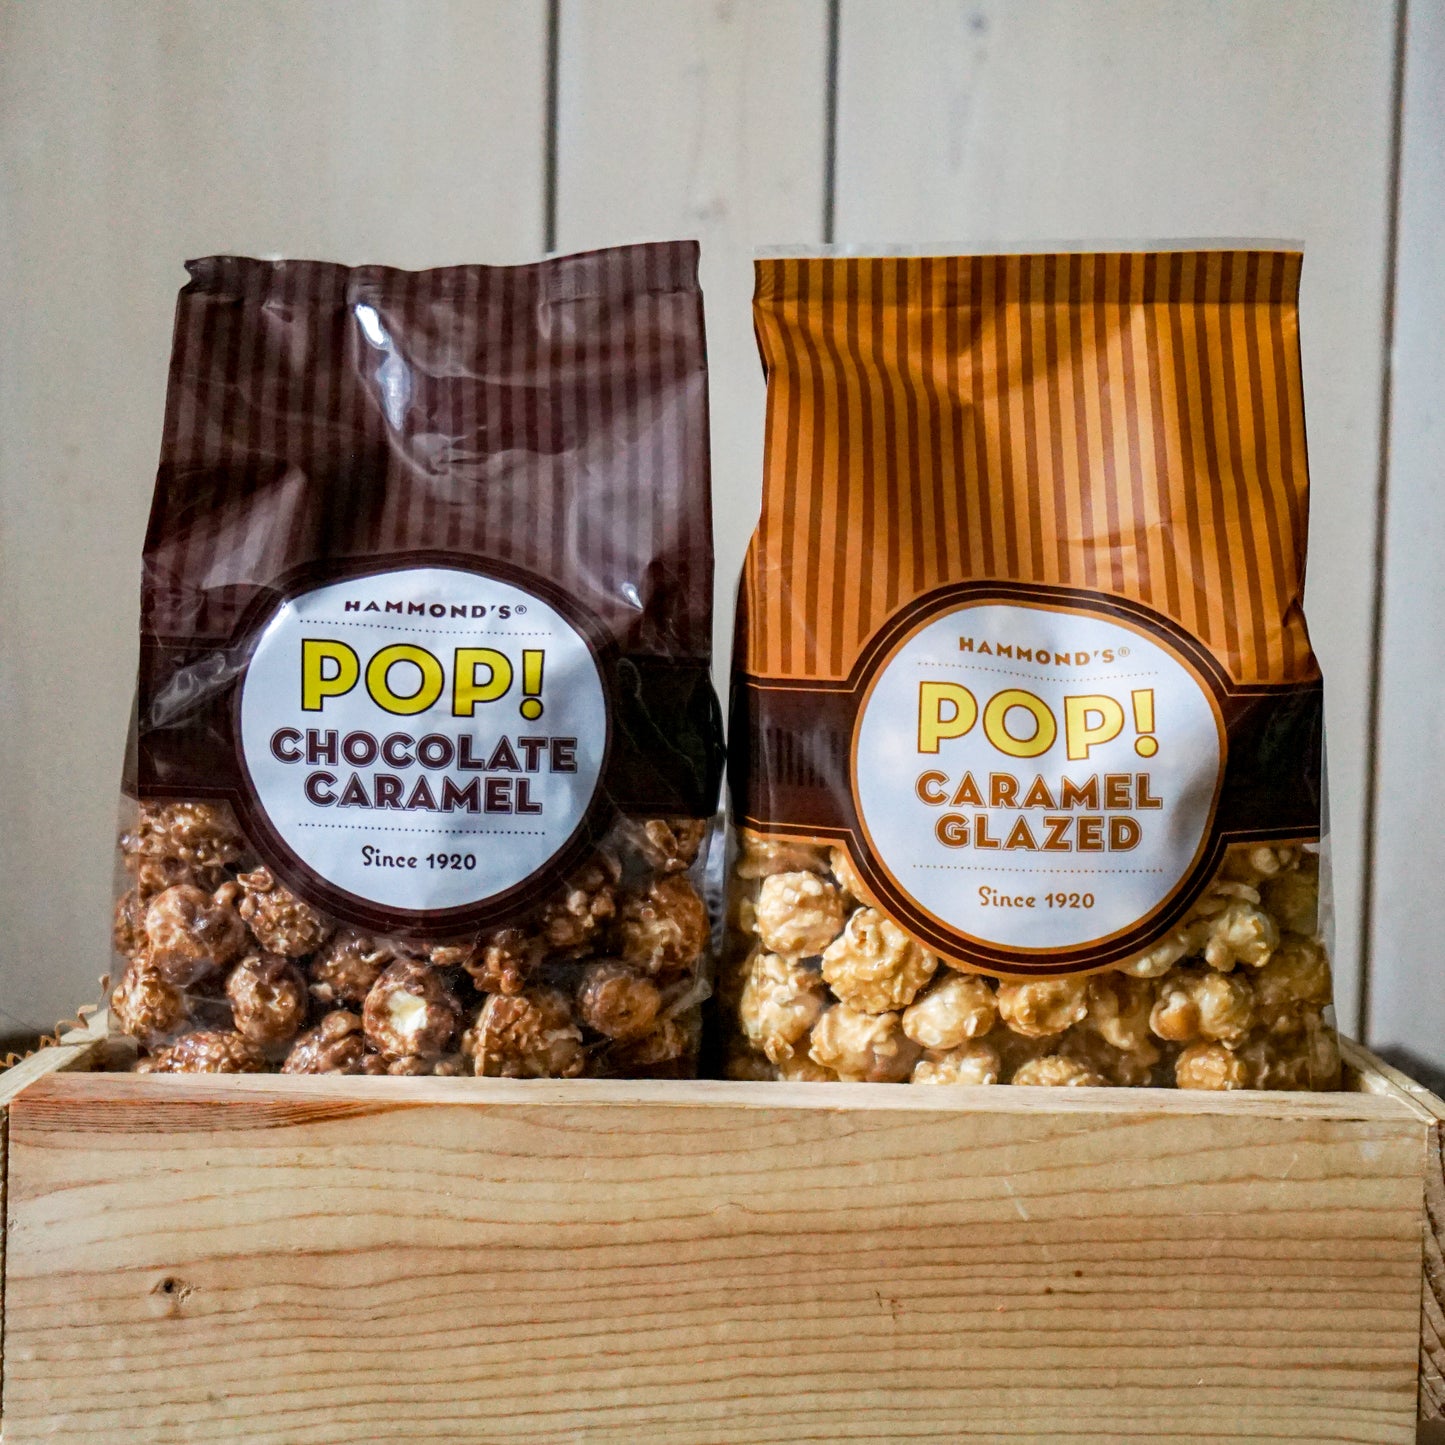 Chocolate + Caramel Popcorn 2-Pack by Hammond's